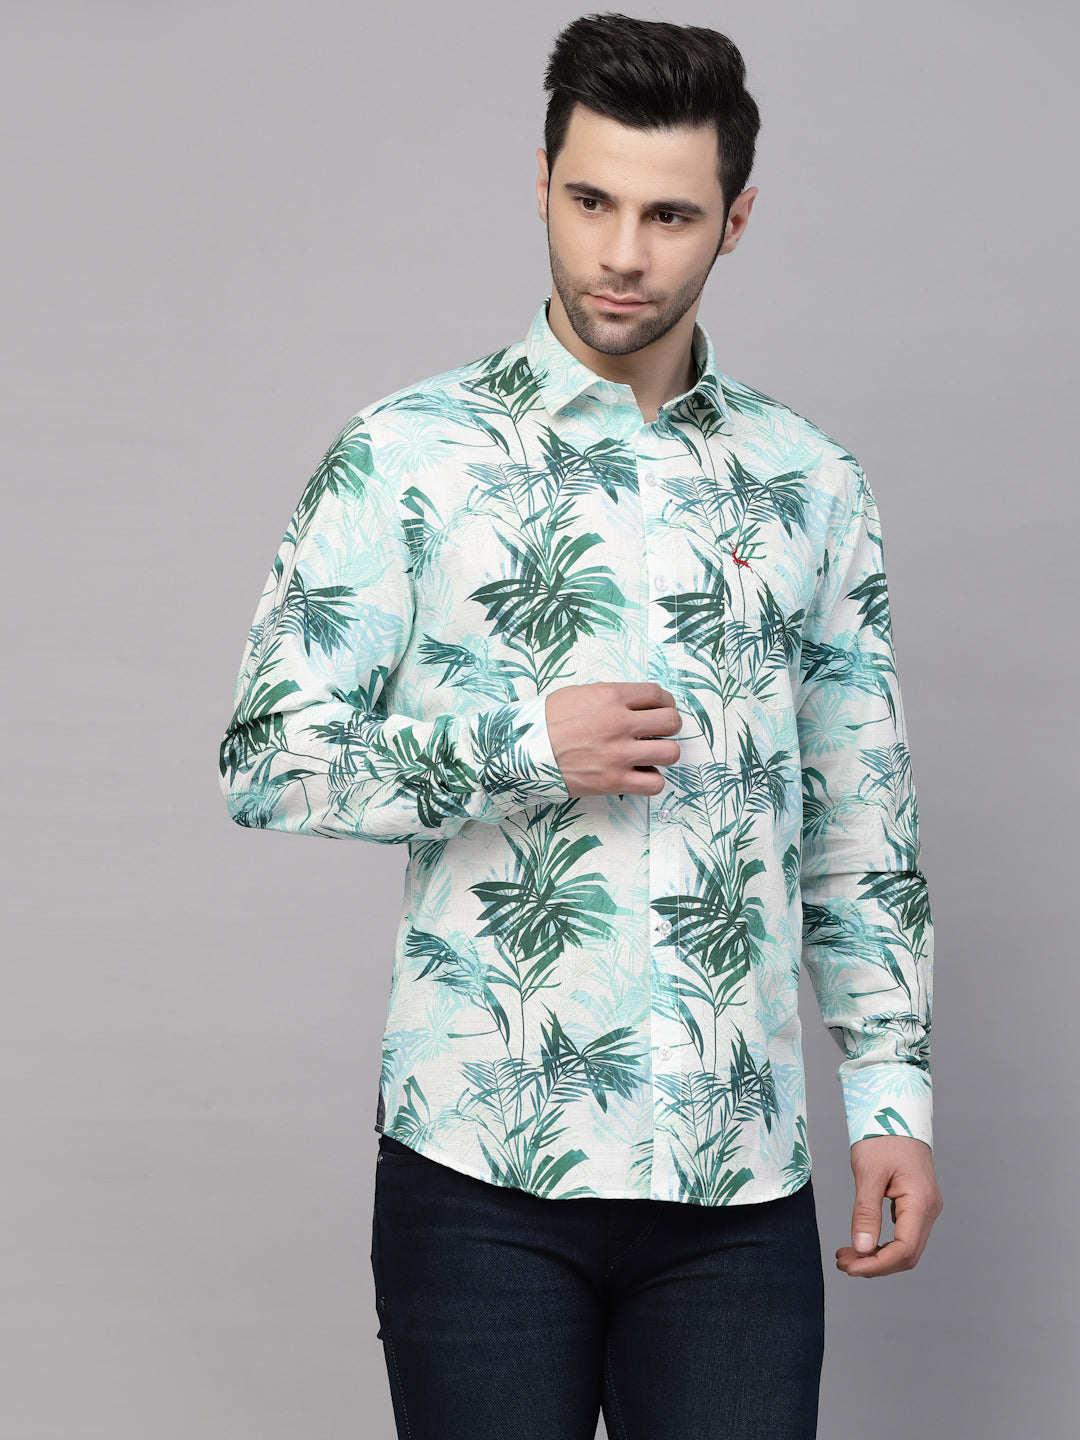 Valbone Men’s Digital Print Green Leafs Printed Regular Fit Casual Shirt Full Sleeves